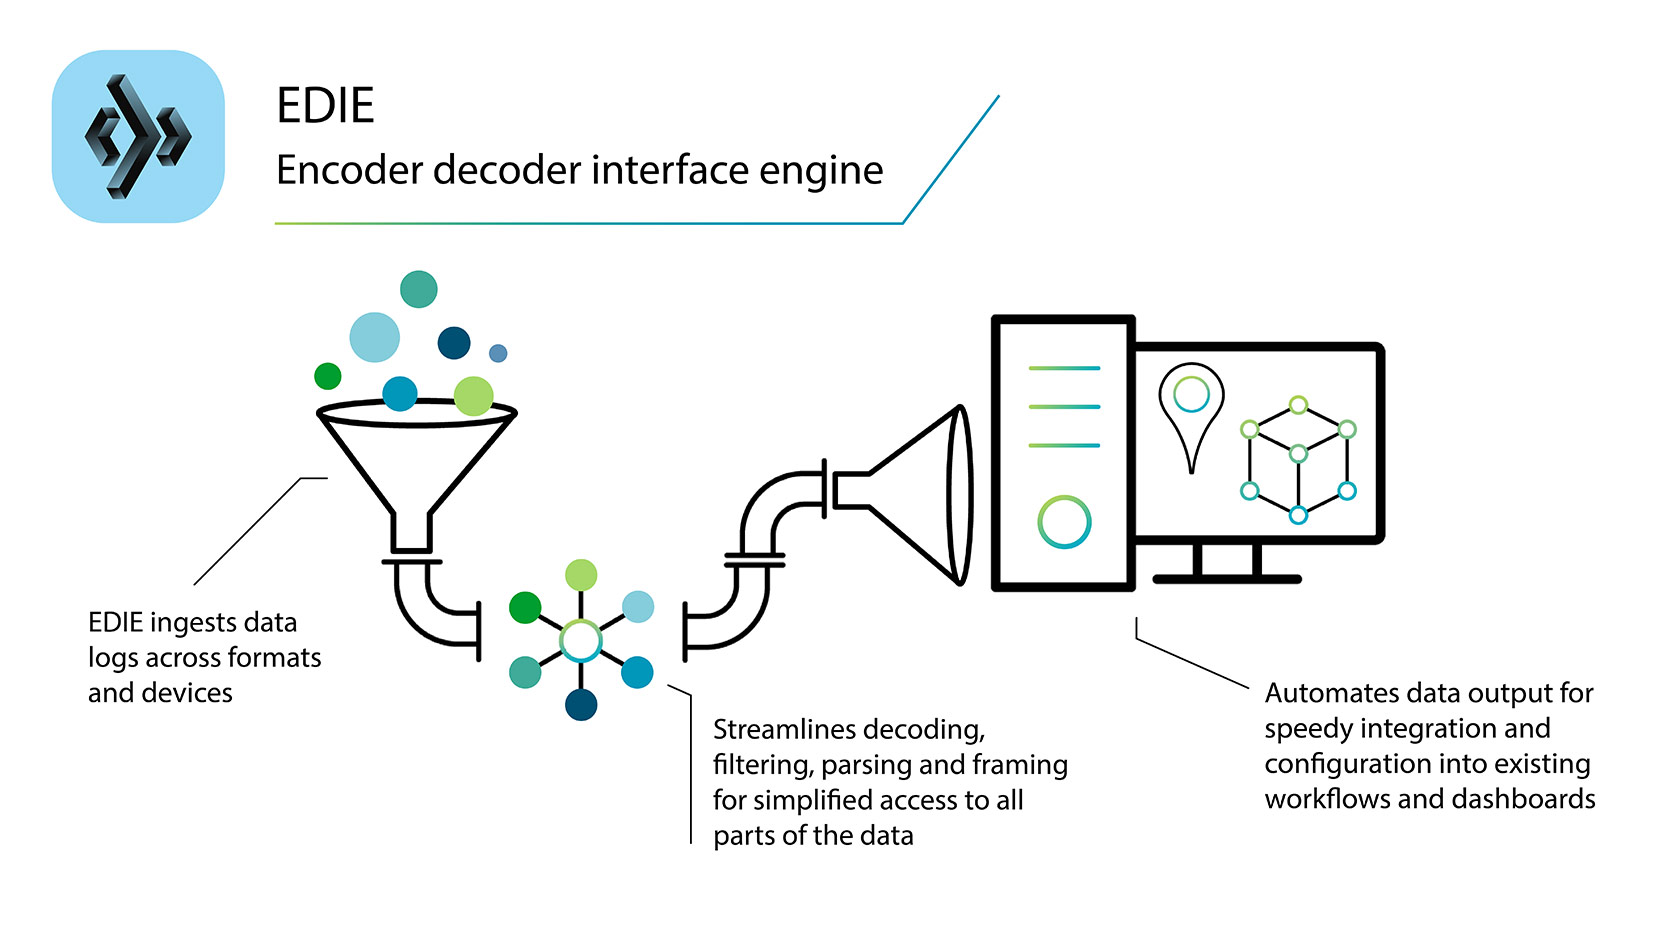 How the encoder decoder interface engine works